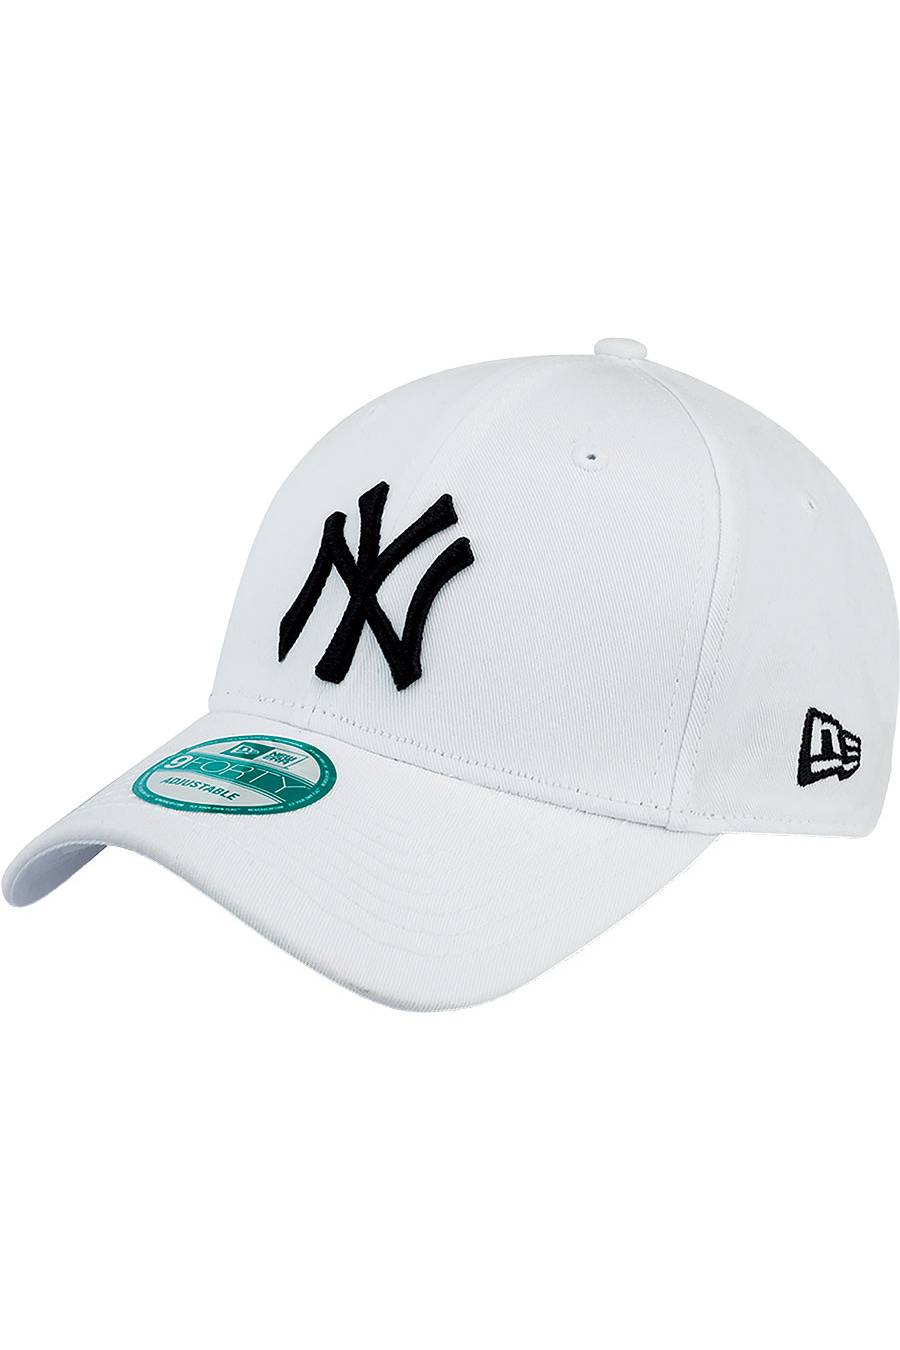 Gorra New Era League basic York Yankees - msdsport